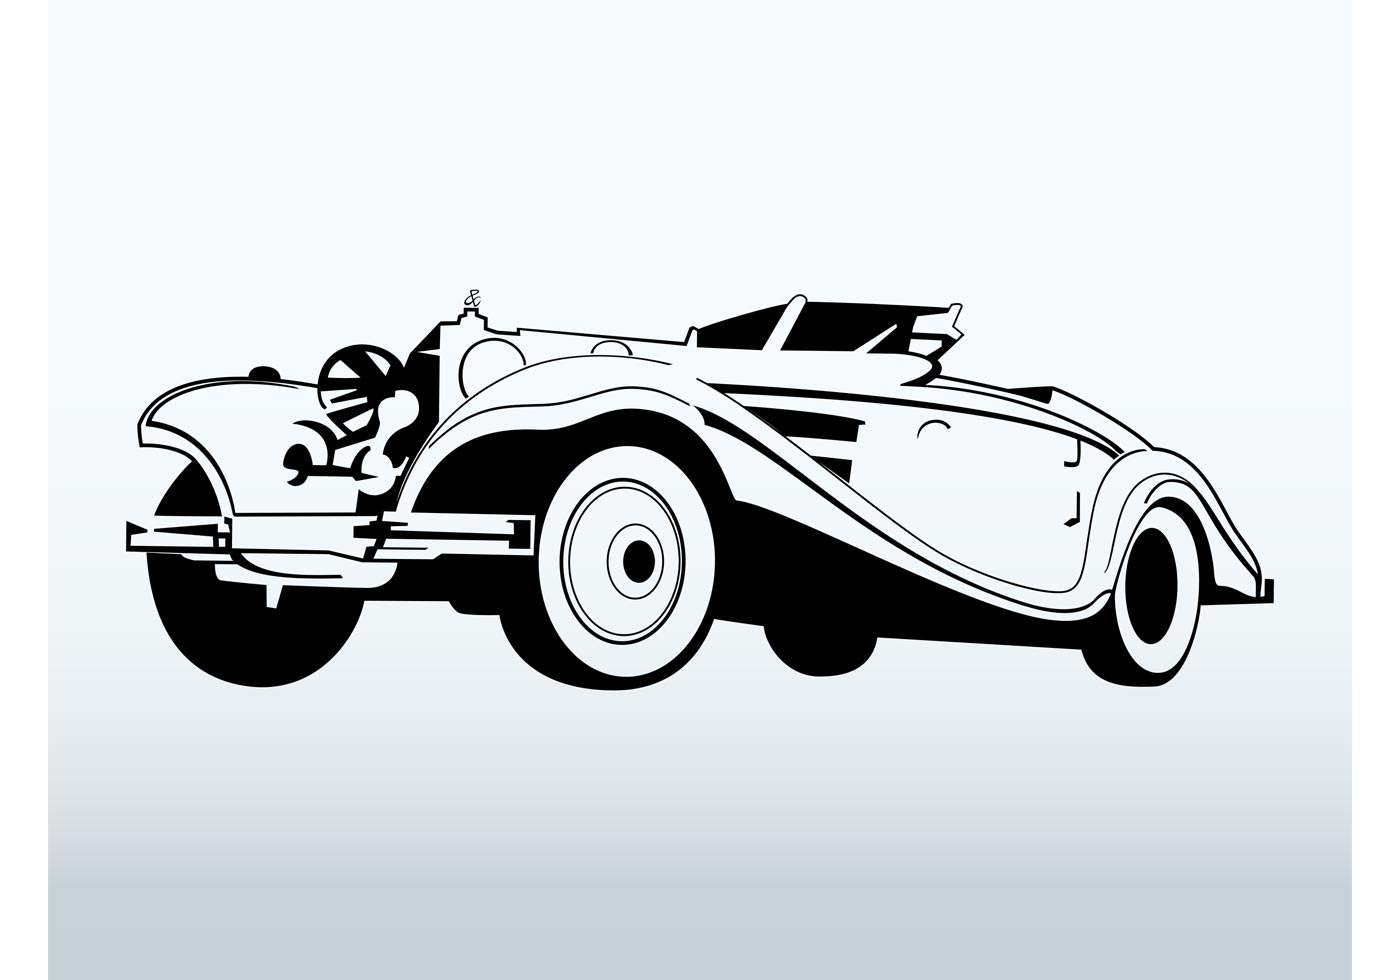 Classic Car Free Vector Art - (3707 Free Downloads)